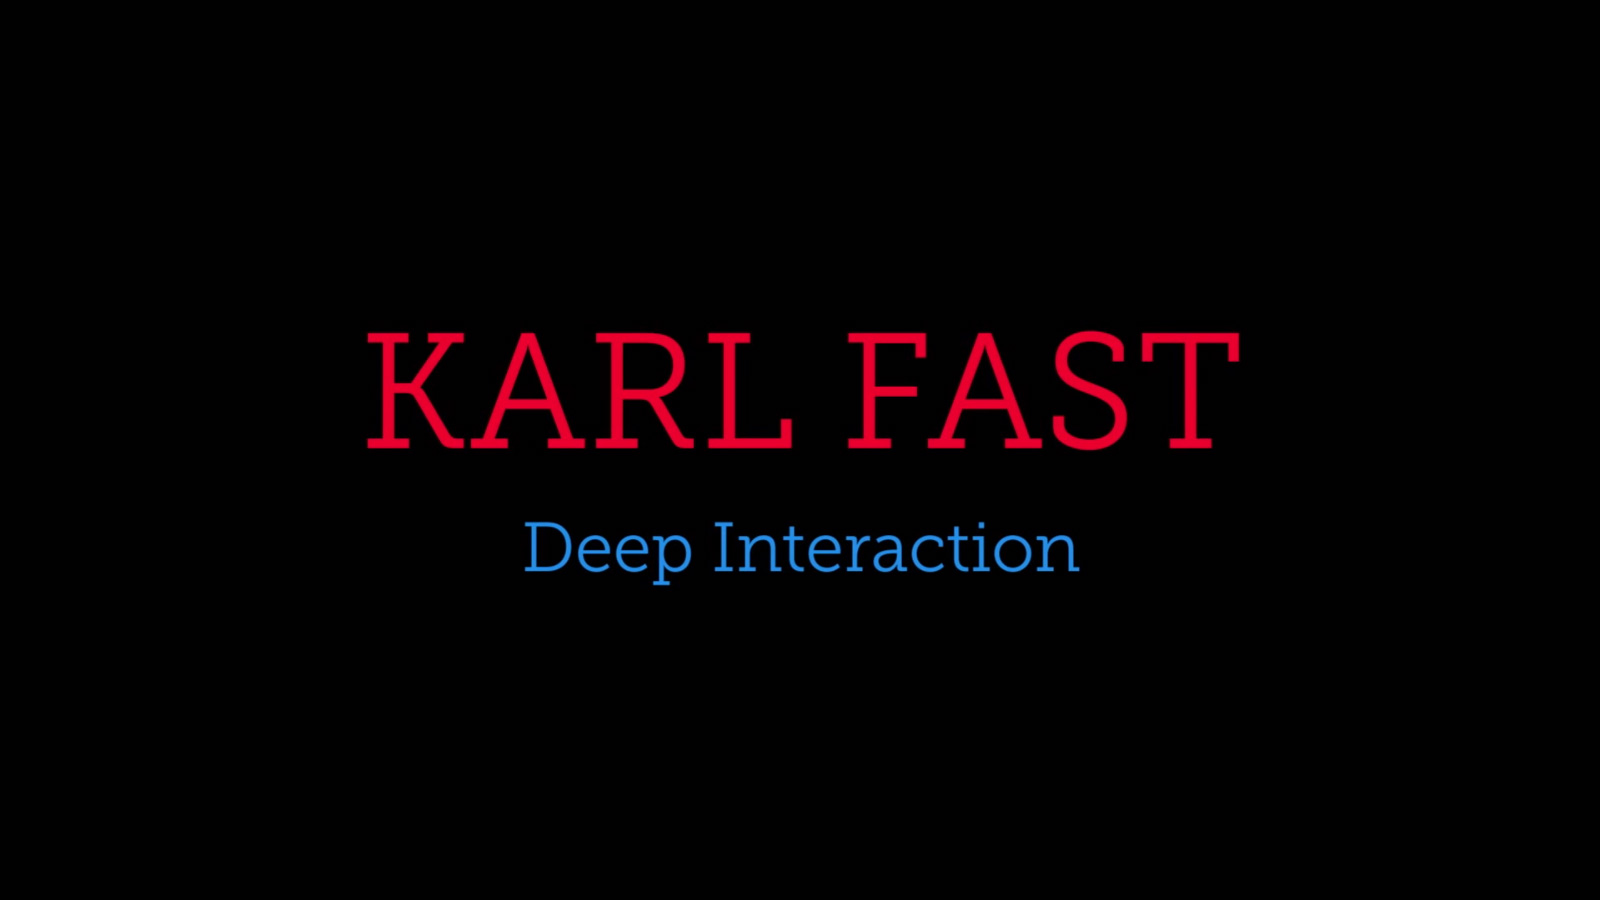 Karl Fast presenting Deep Interaction